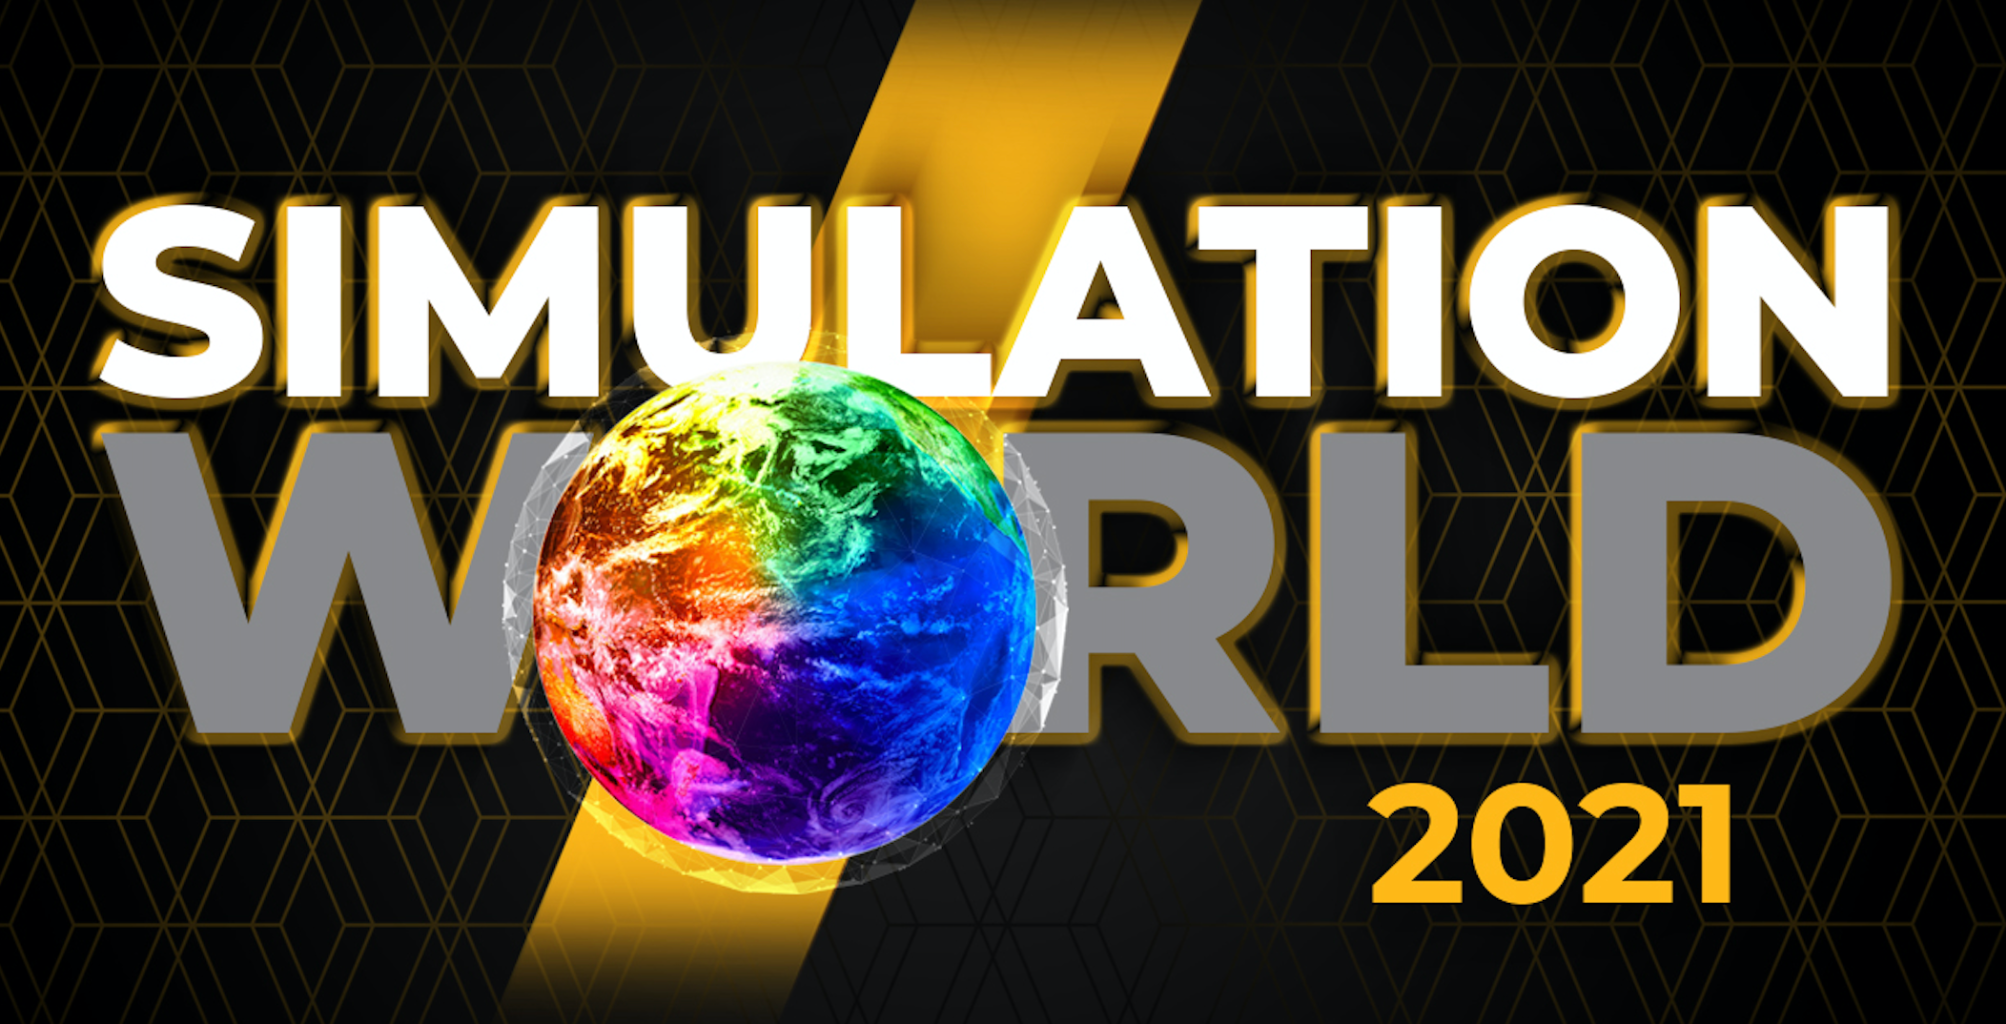 ansys simulation world 2021 logo v2